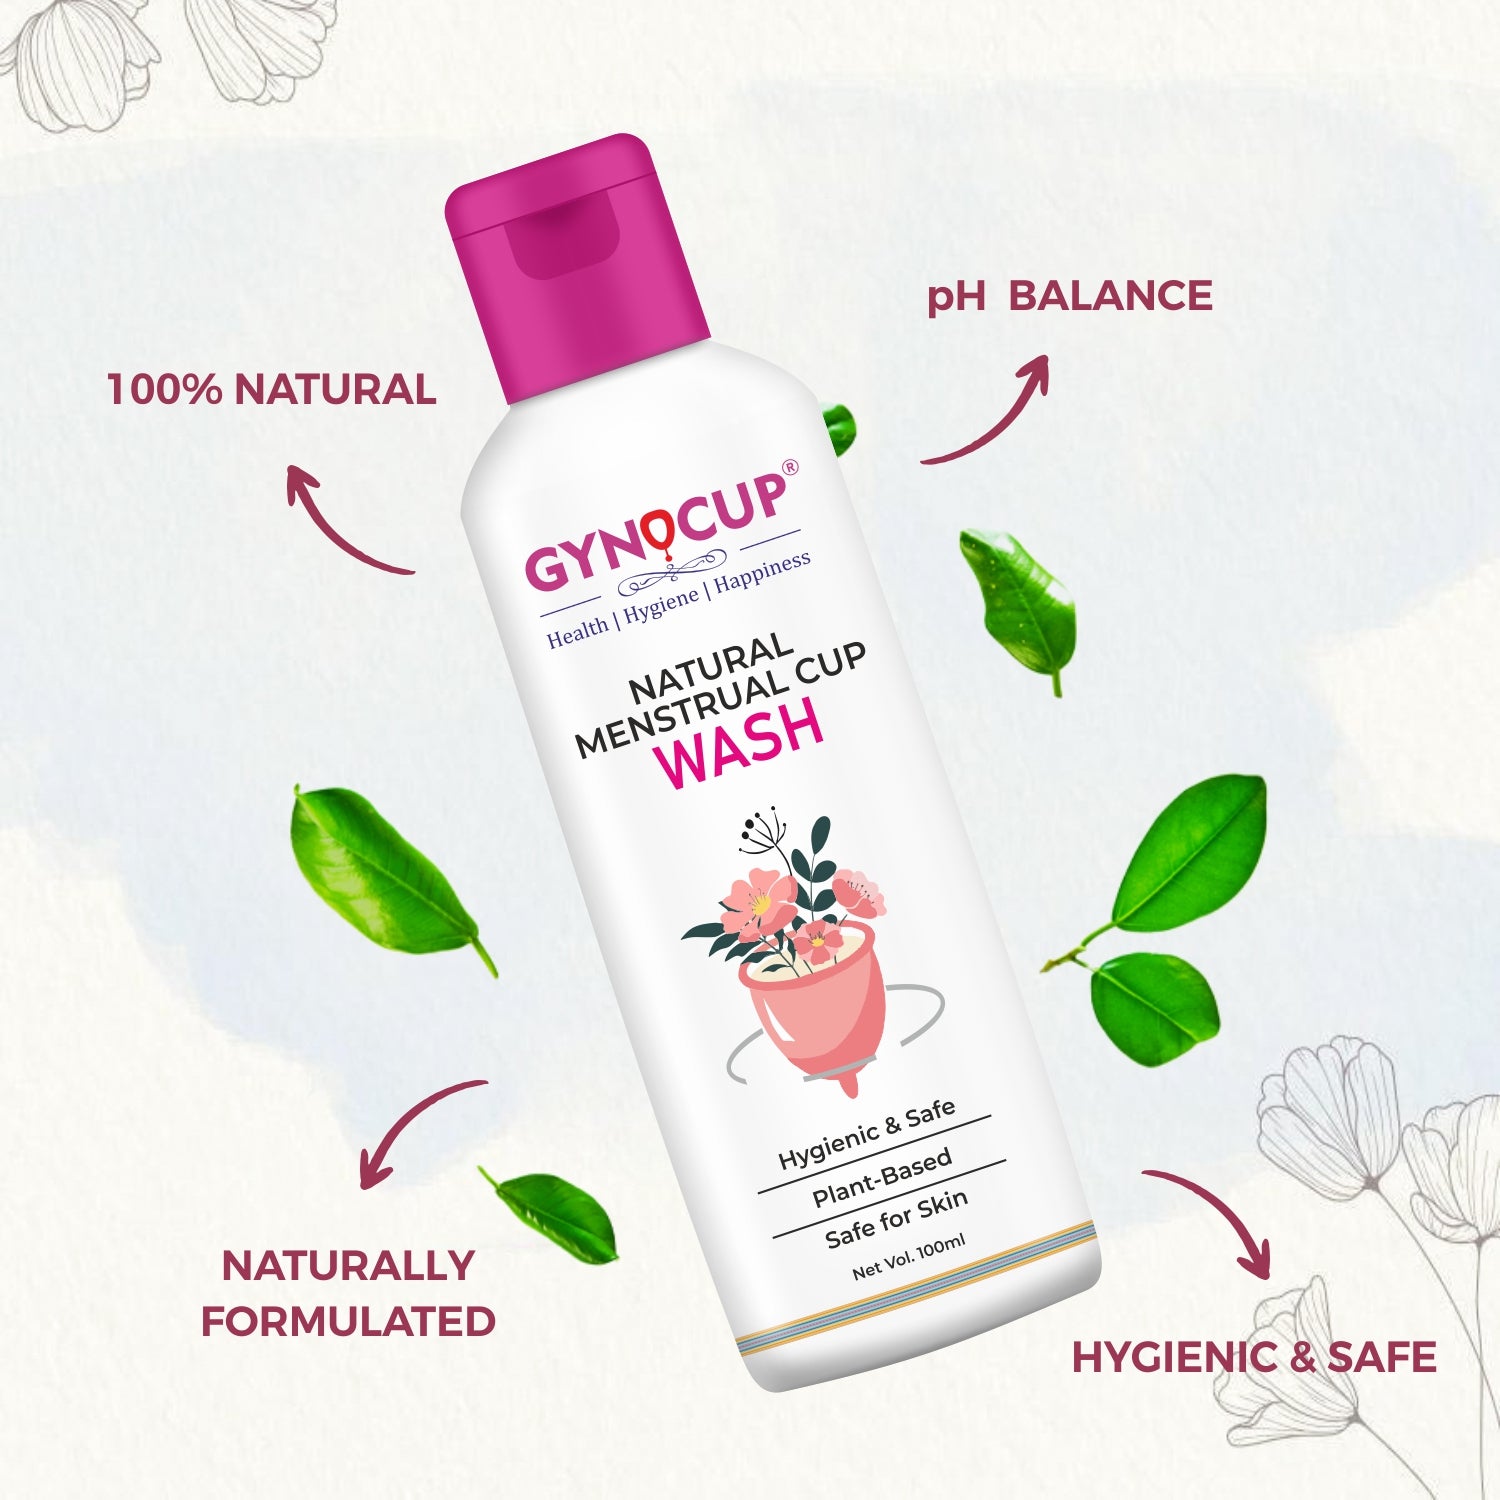 Gynocup Reusable Menstrual Cup hygiene Kit